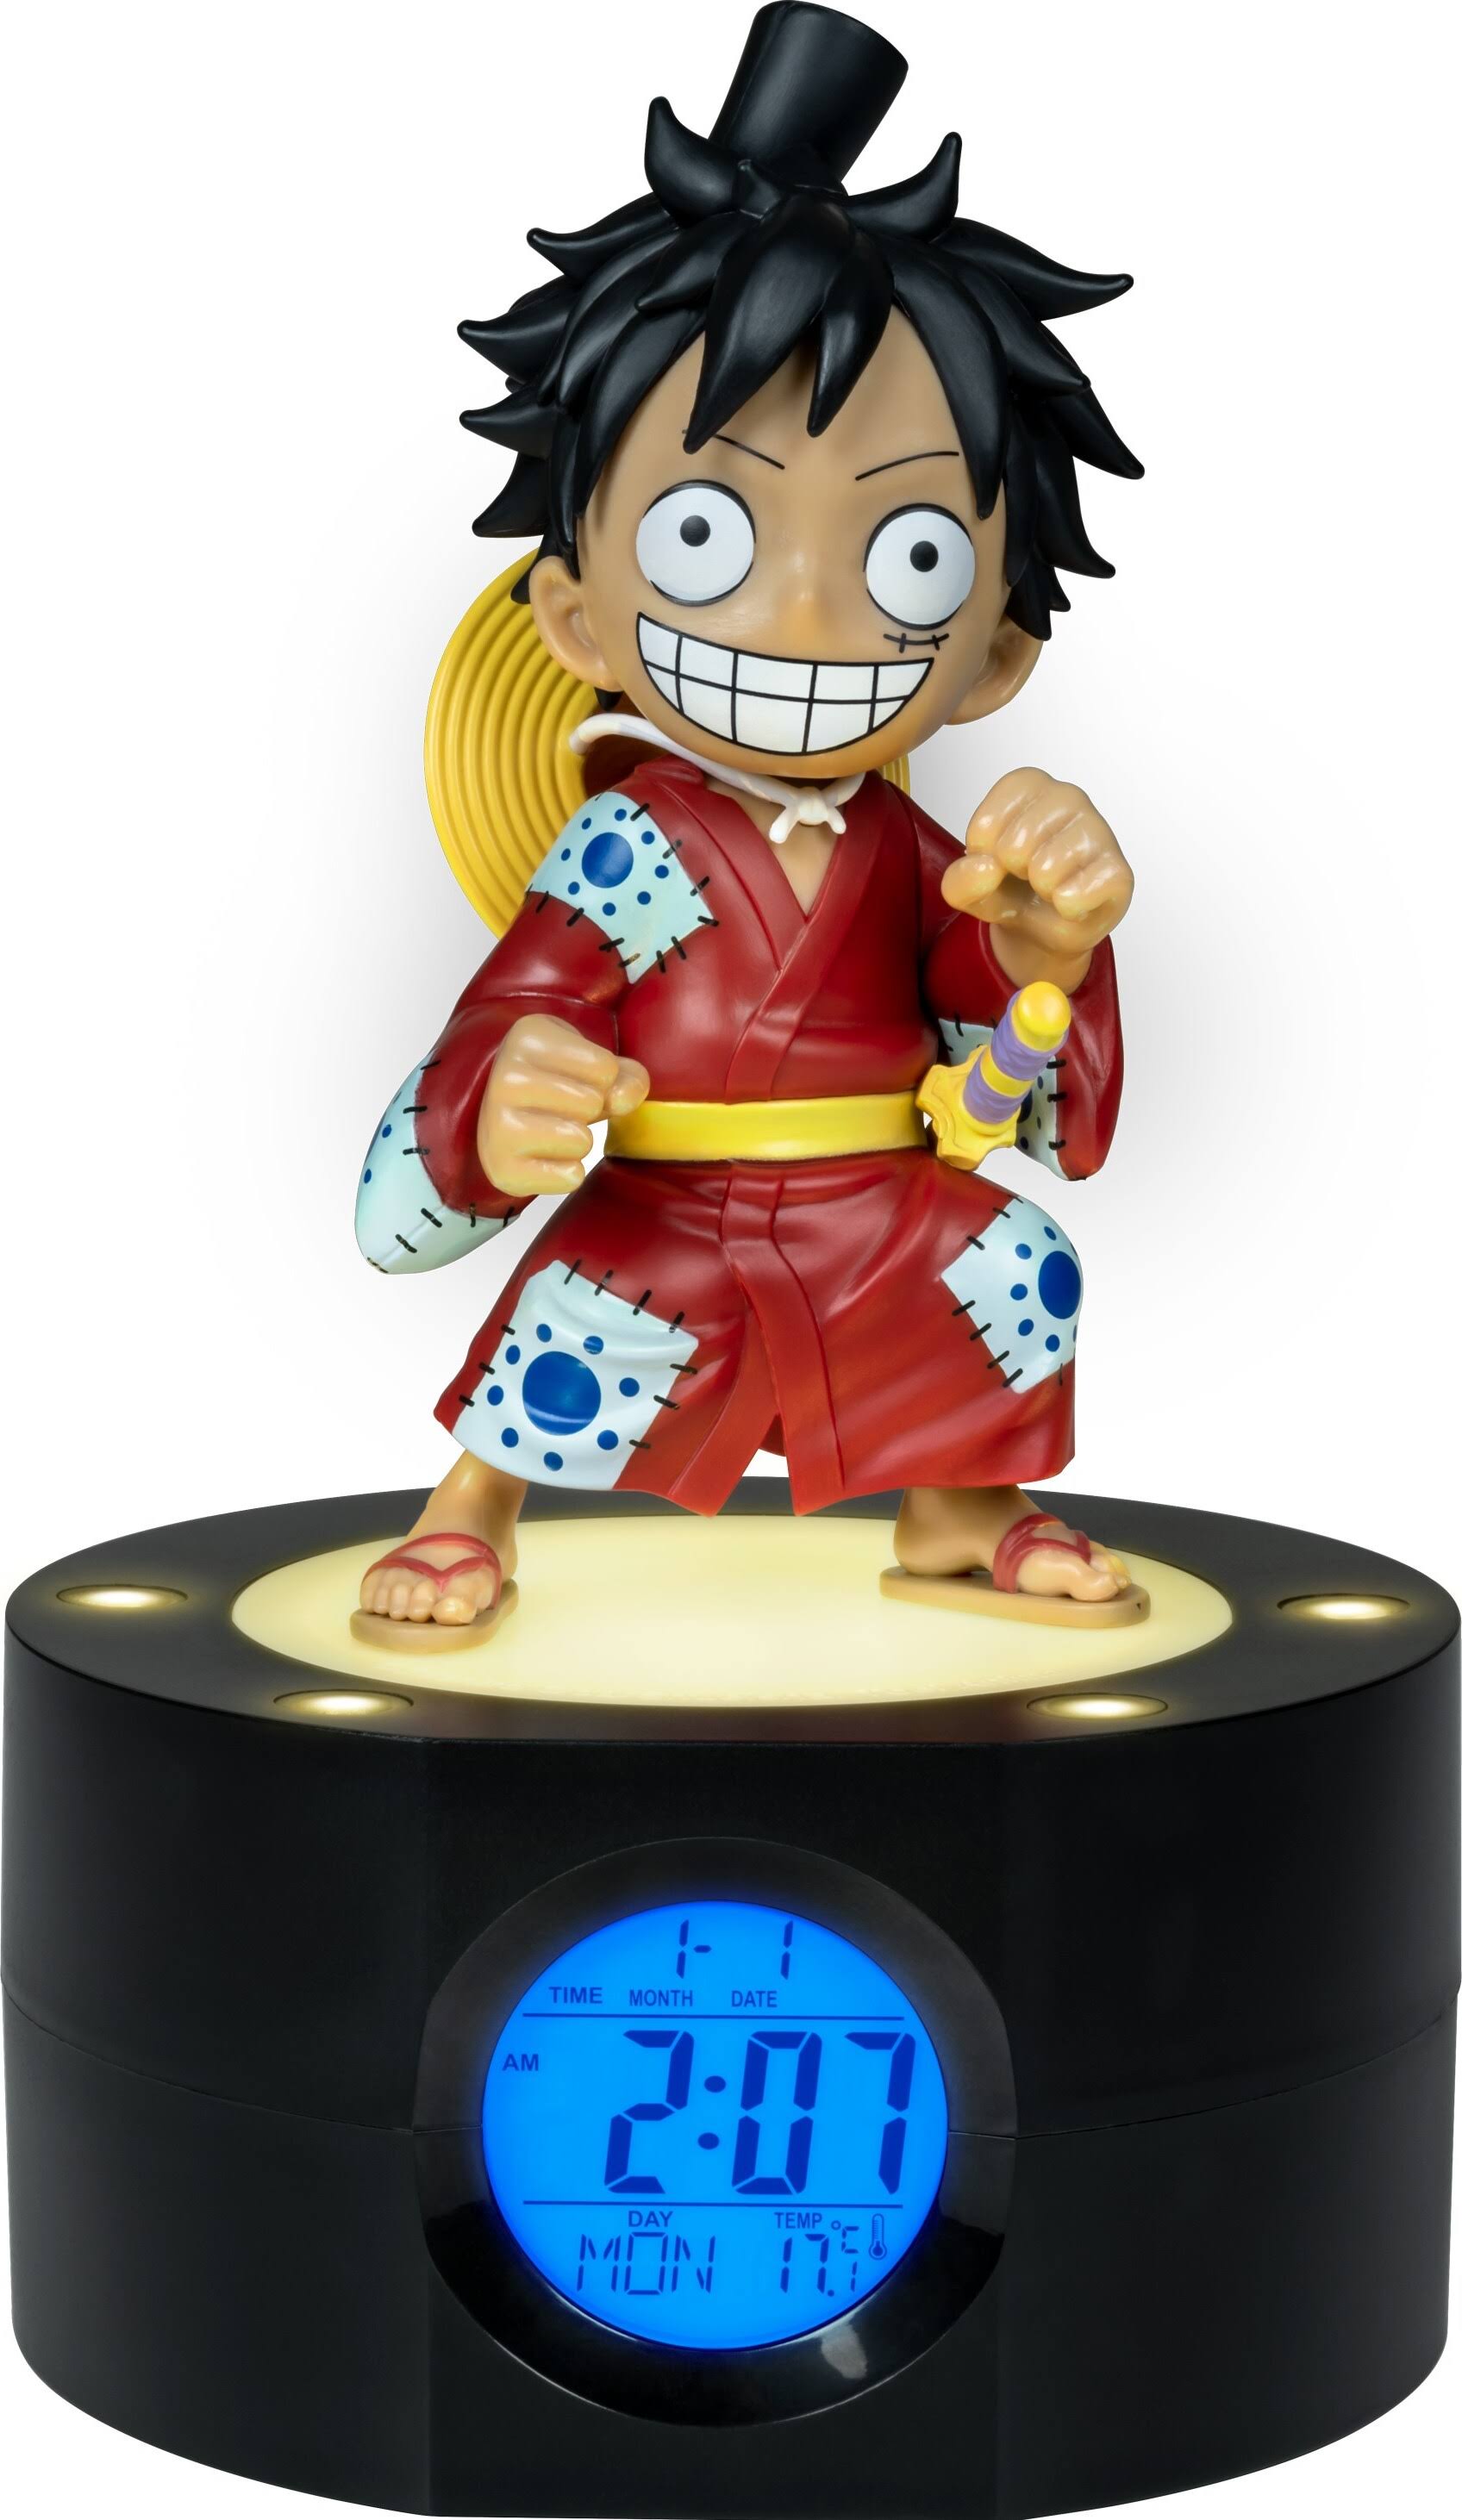 Teknofun One Piece - Sveglia digitale Luffy [Lampada a LED] - acquista su